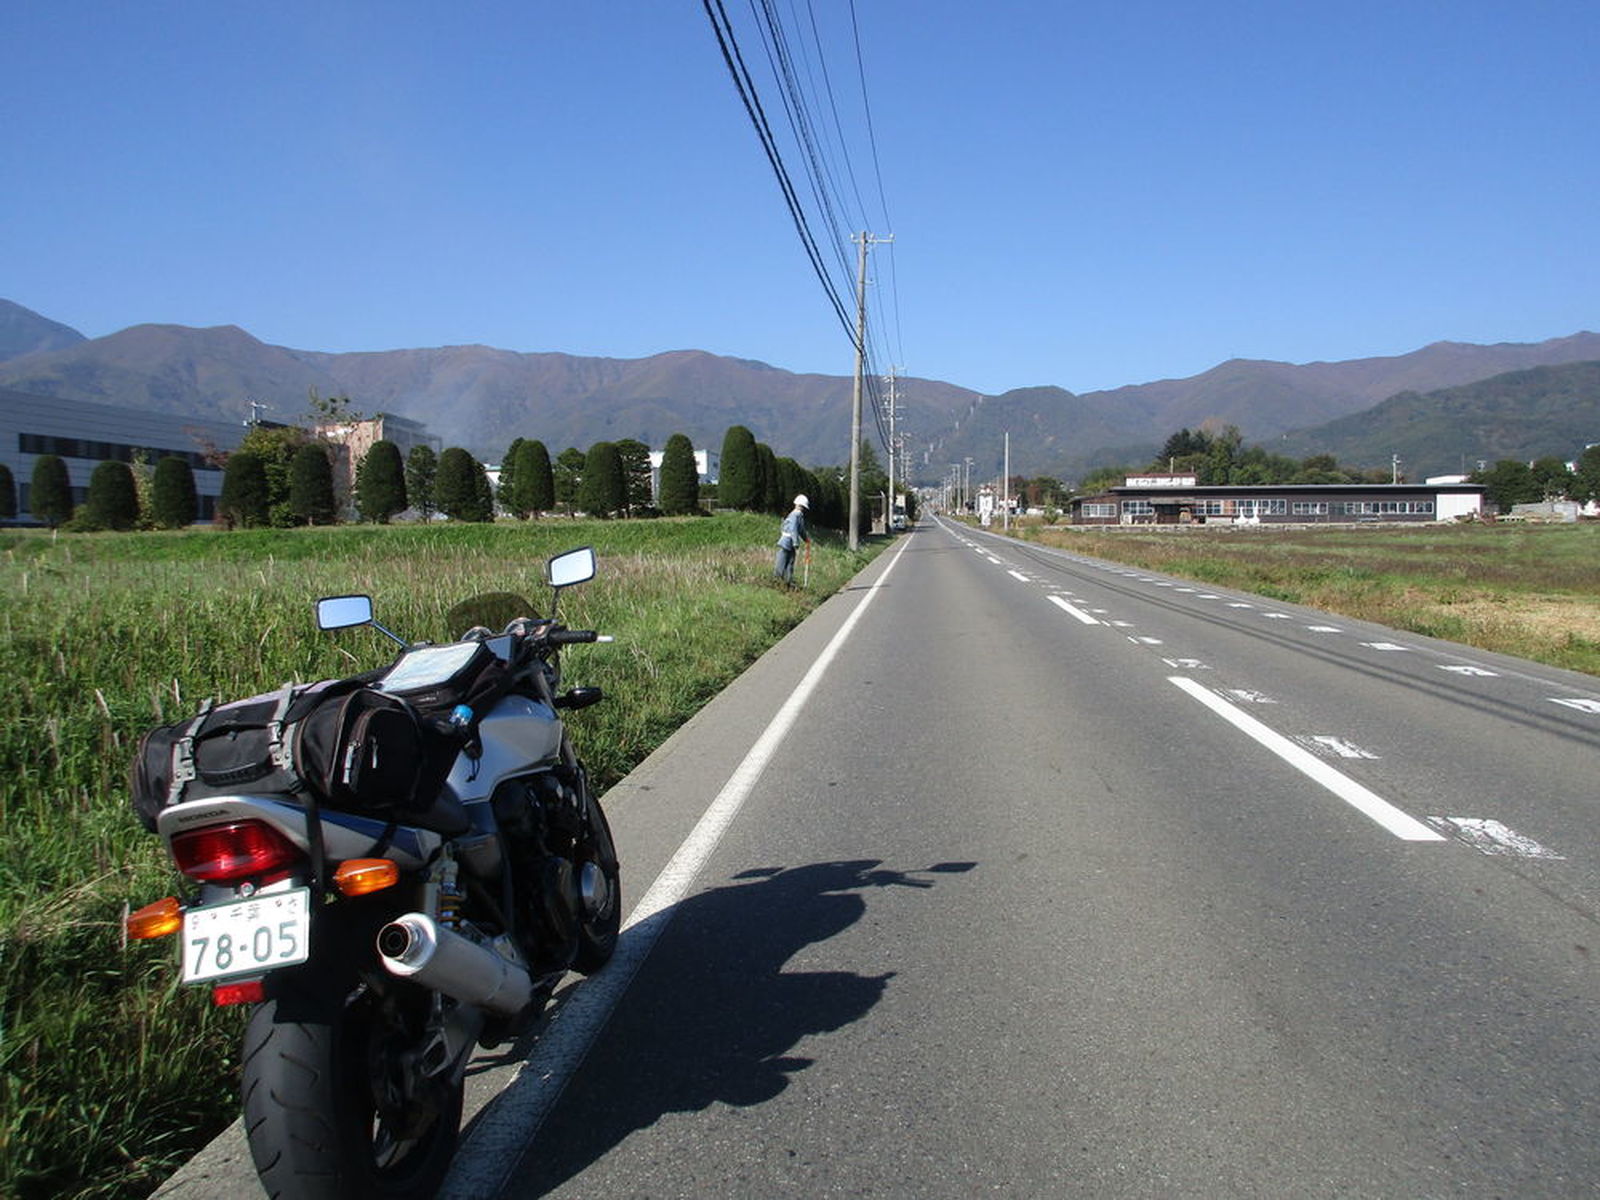 Honda Cb400スーパーフォア 雲上の御嶽山パノラマライン 木曽路バイク旅2 ウェビックコミュニティ